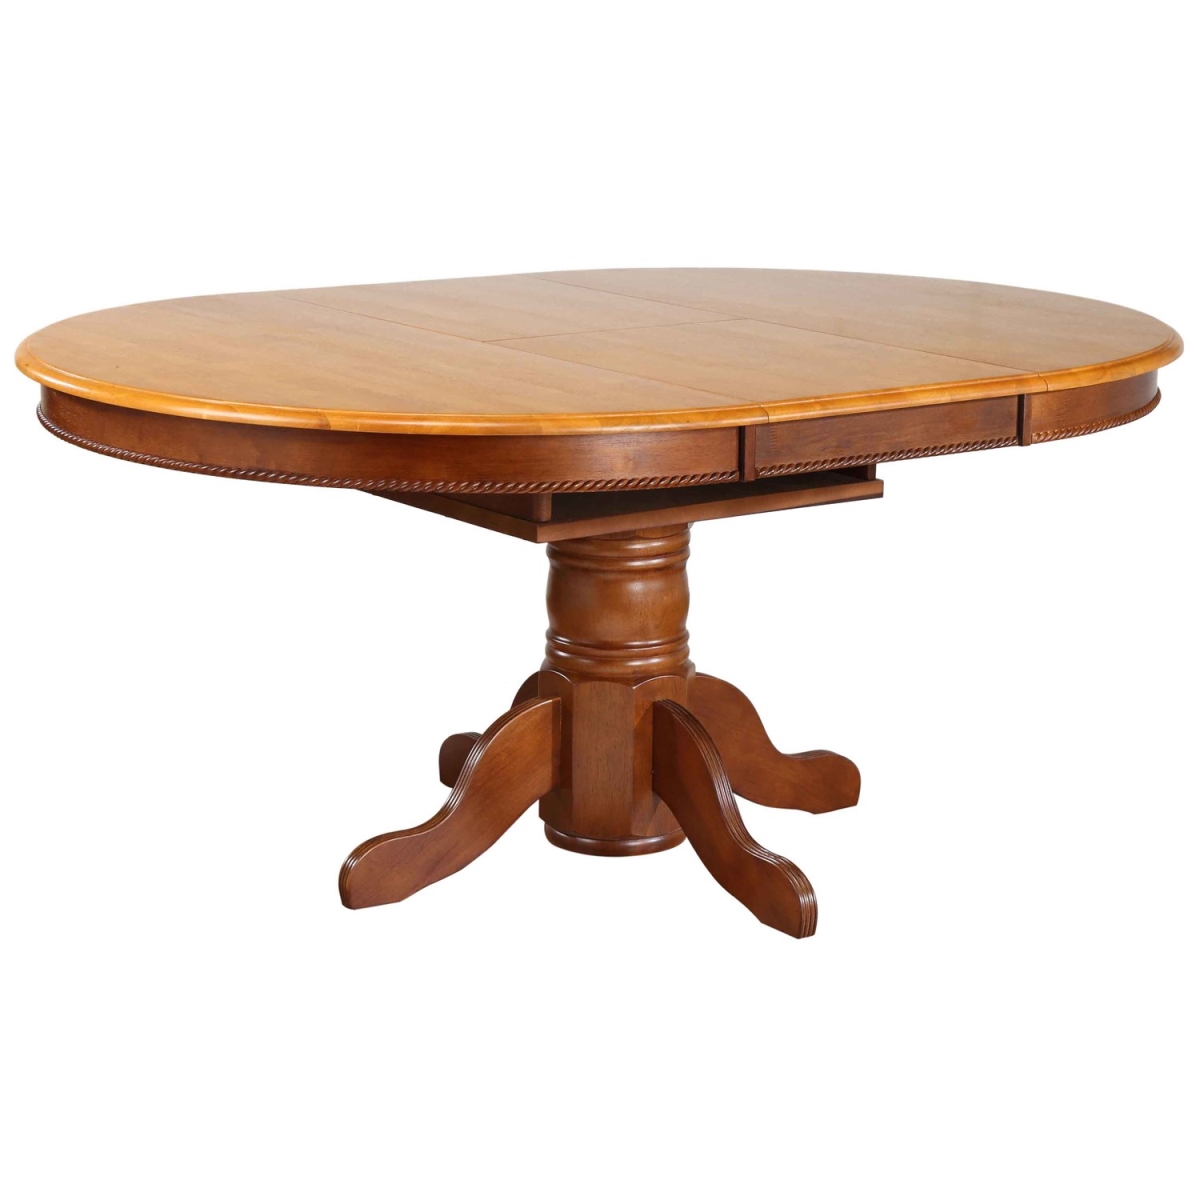 Sunset Tradingdlu-tbx4866-nlo Sunset Trading Pedestal Dining Table- Nutmeg With Light Oak Butterfly Top